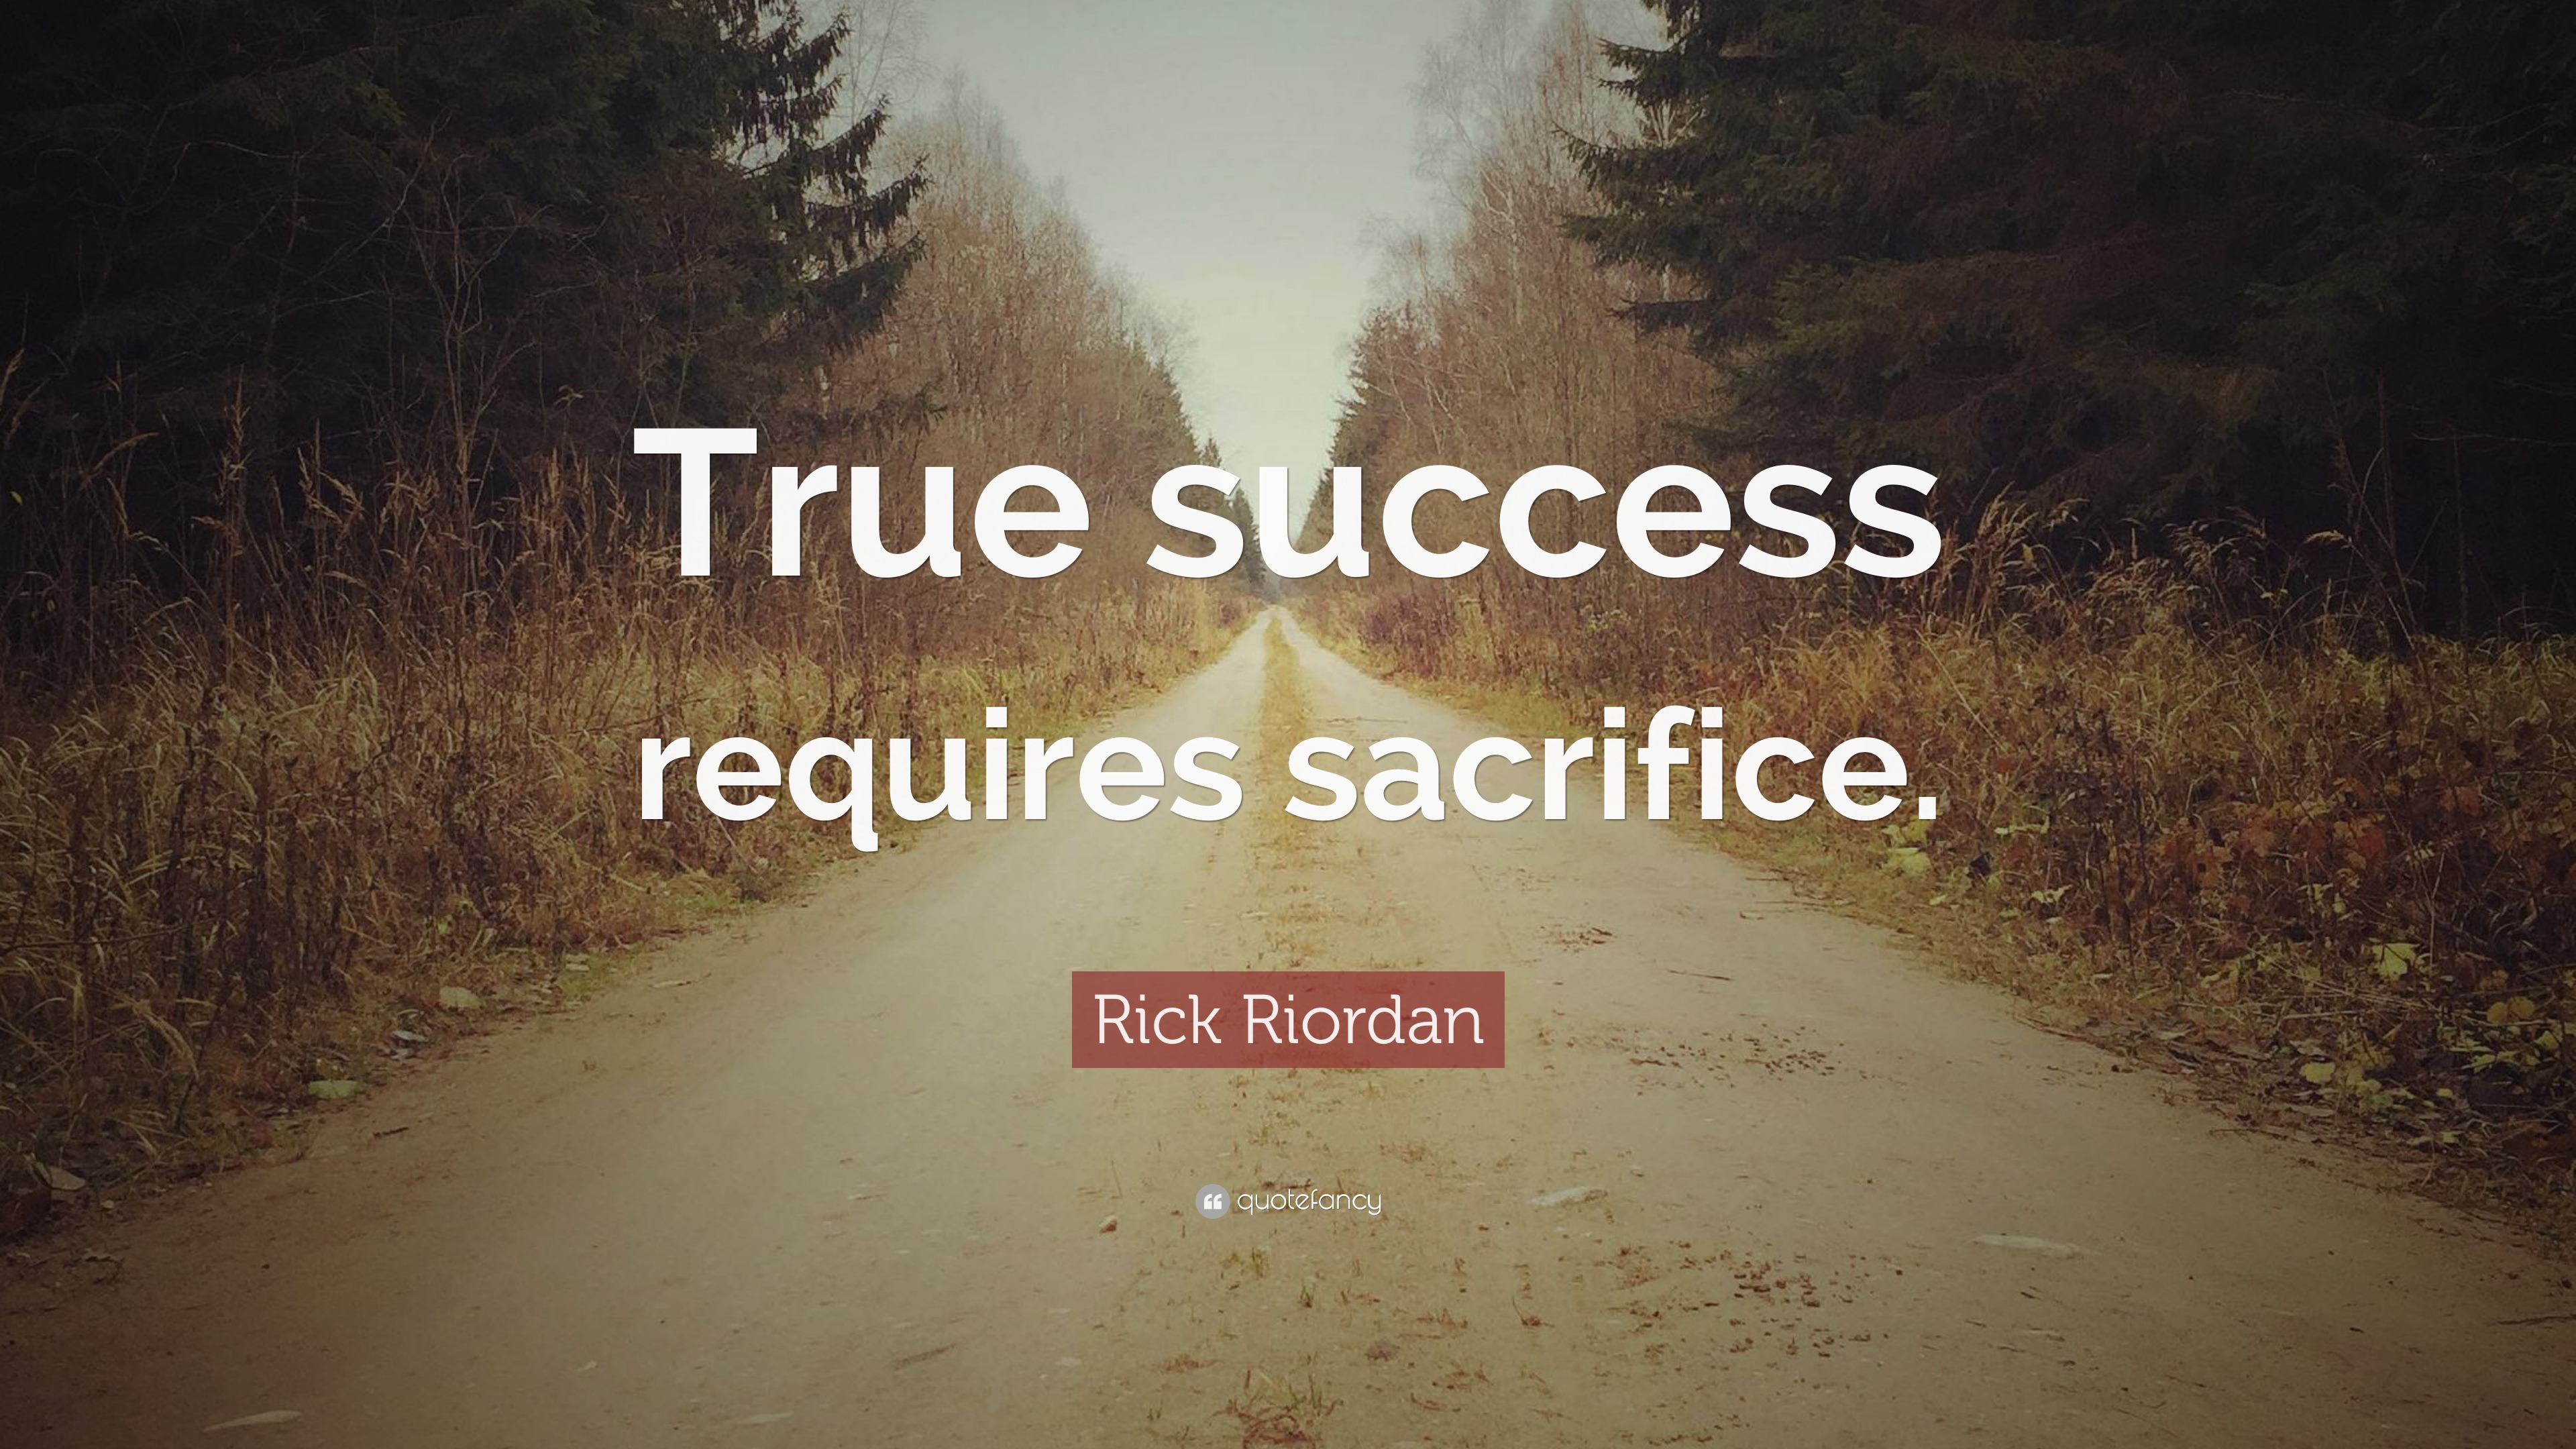 sacrifice success quotes